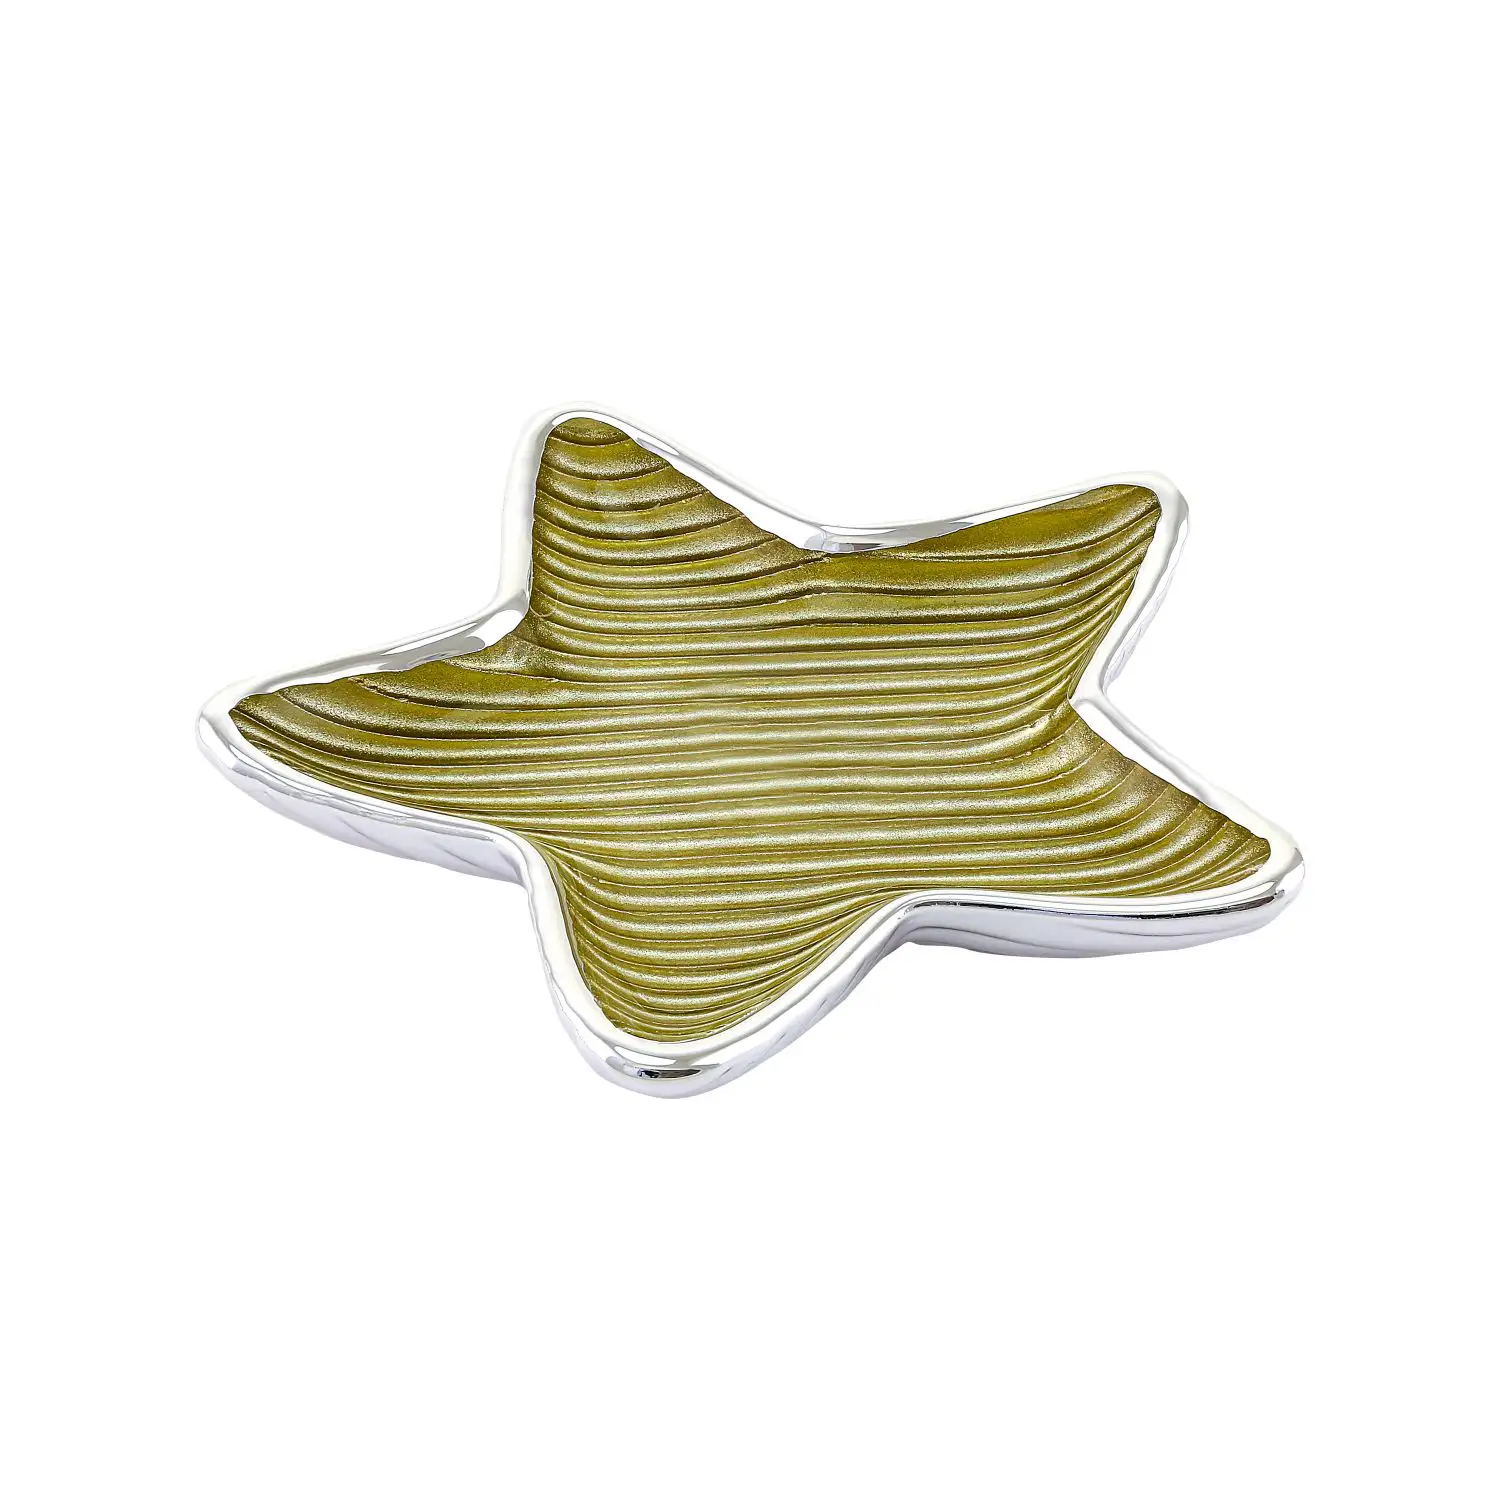 Тарелка стеклянная STELLA RIGHE (цвет золотой) диаметр 13 см тарелка стеклянная conchiglia цвет золотой диаметр 15 см